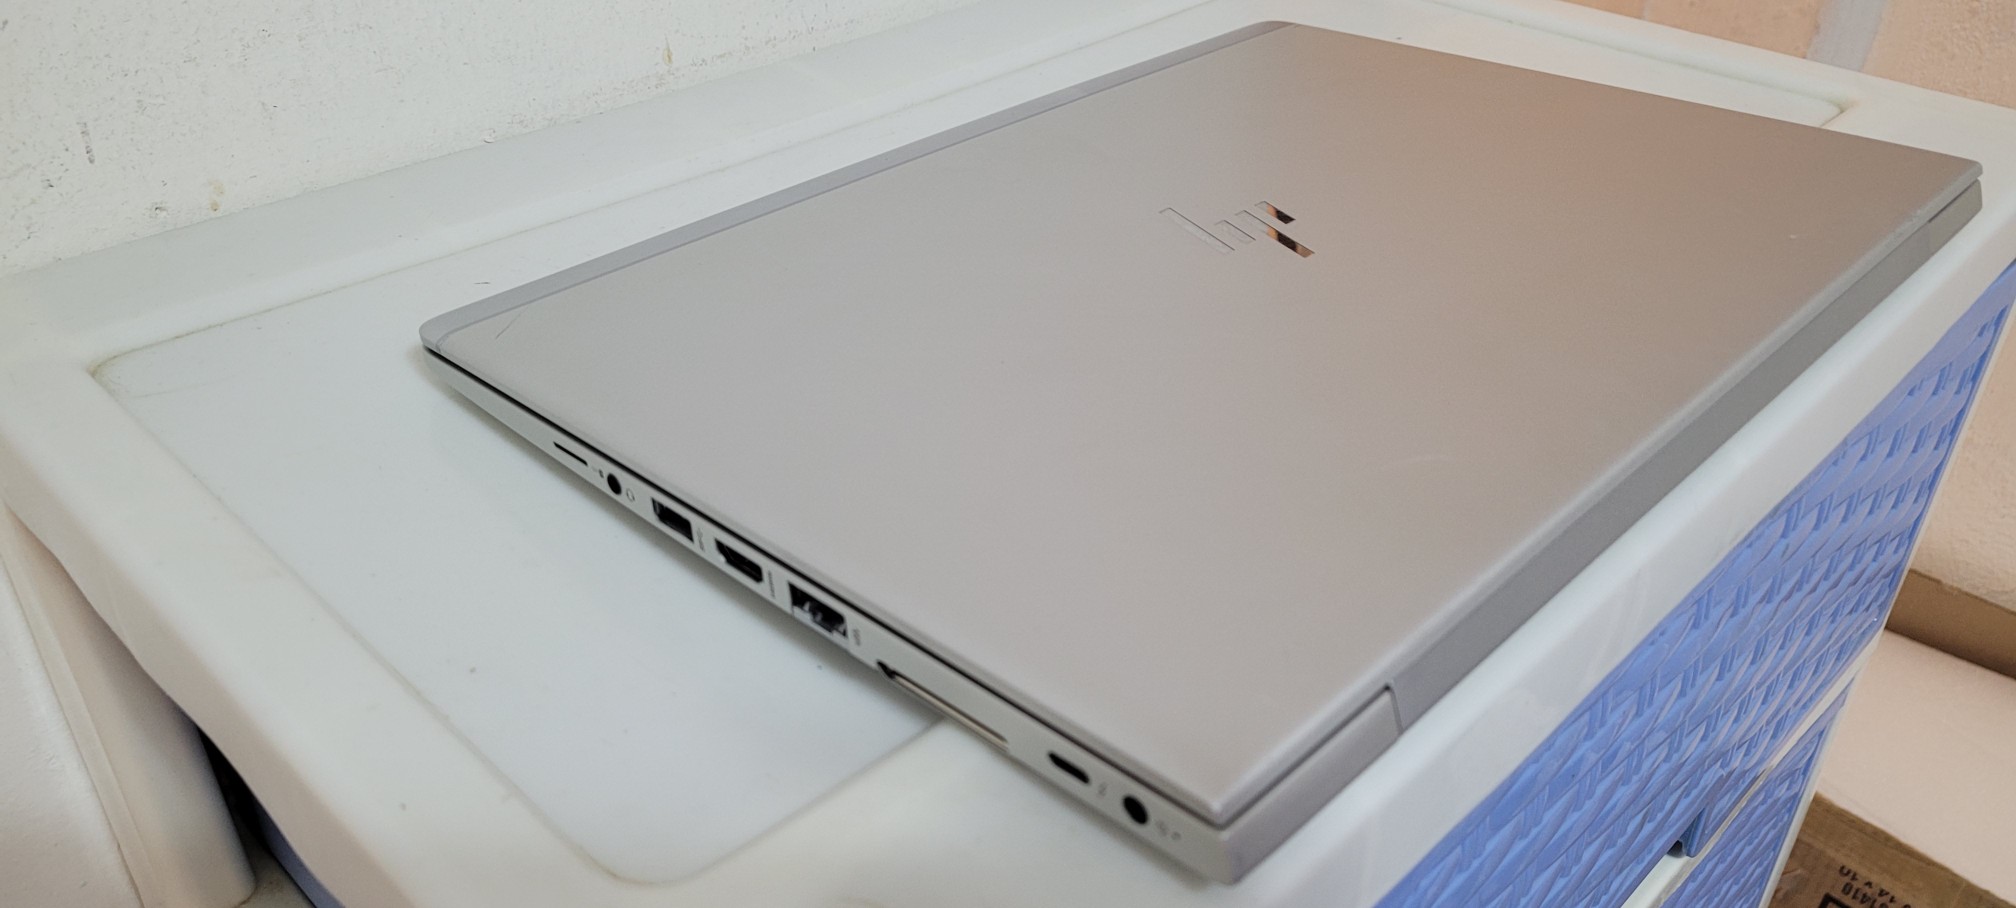 computadoras y laptops - laptop hp Slim 14 Pulg Core i5 7ma Gen Ram 8gb ddr4 Disco 256gb SSD 1080p 2